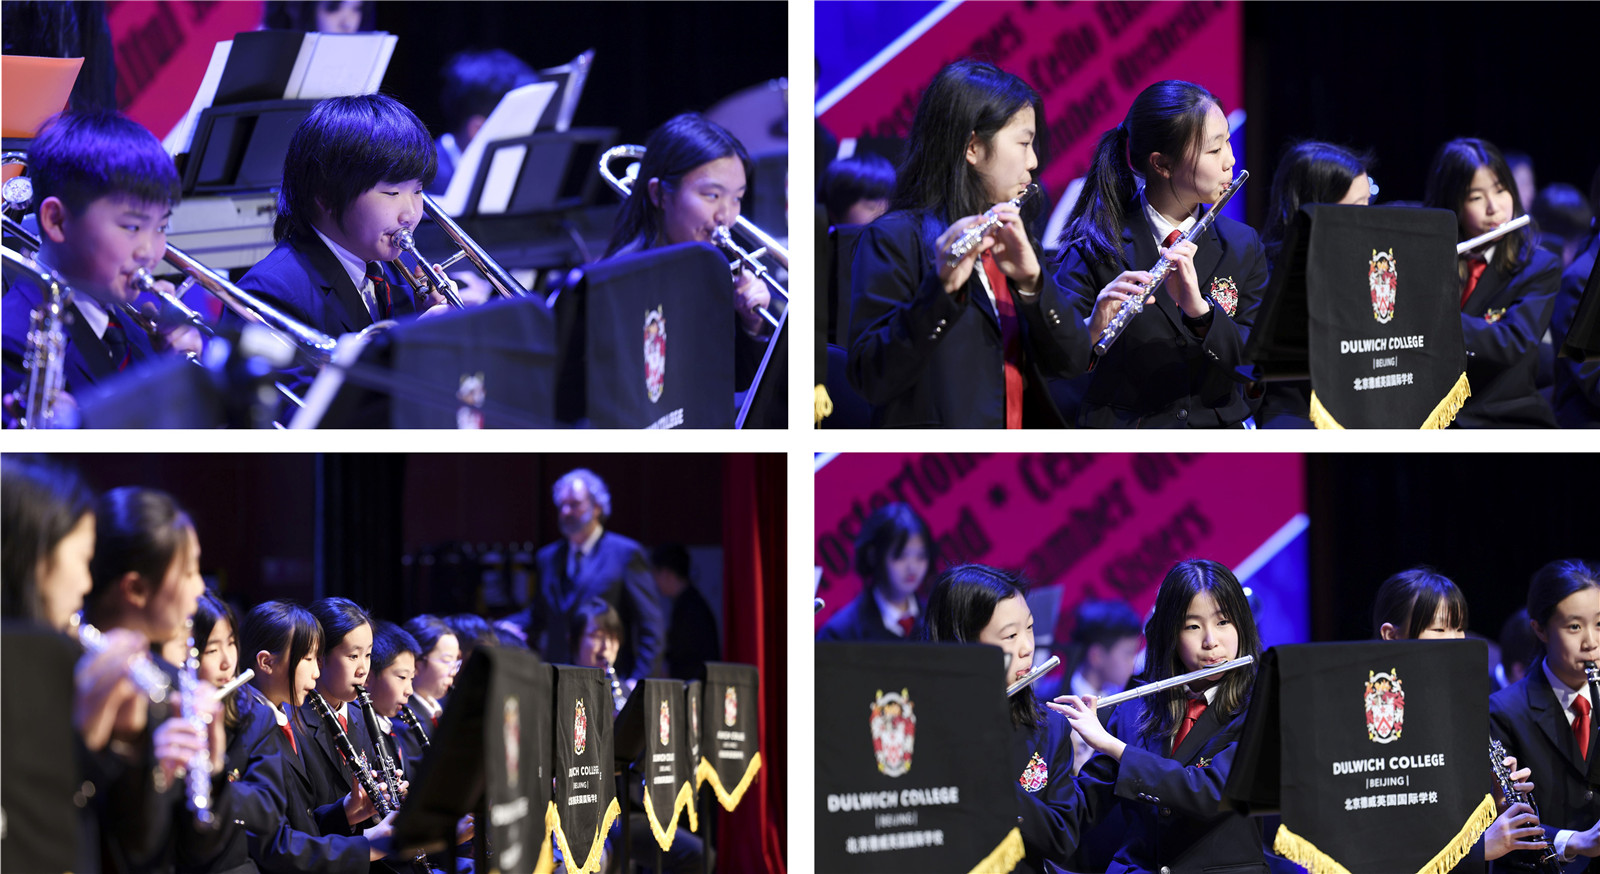 Senior School students performing music art